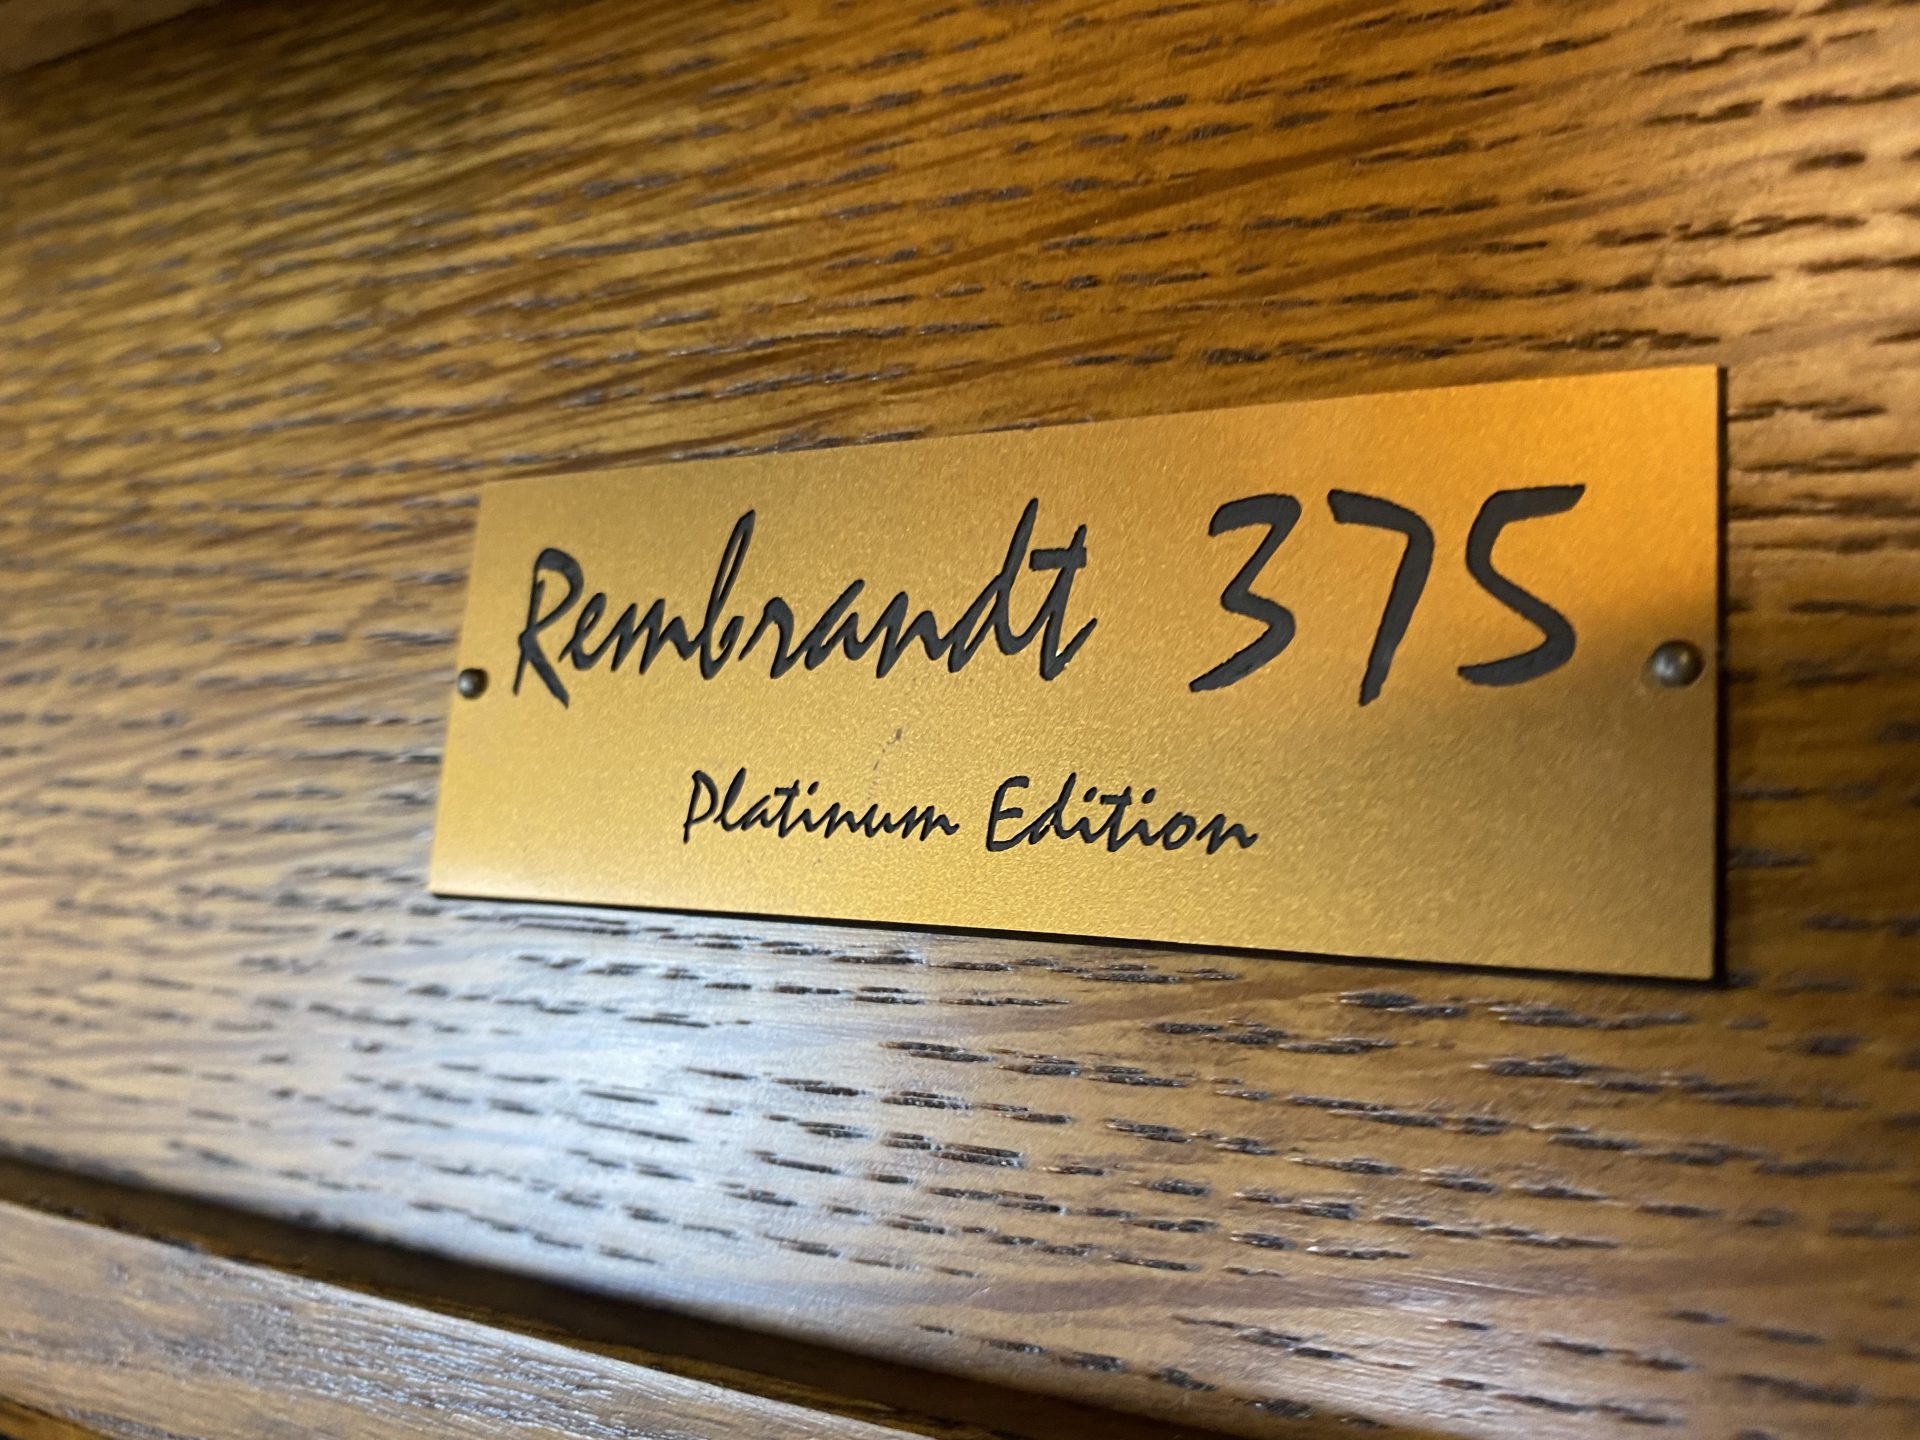 Rembrandt 375 (3)